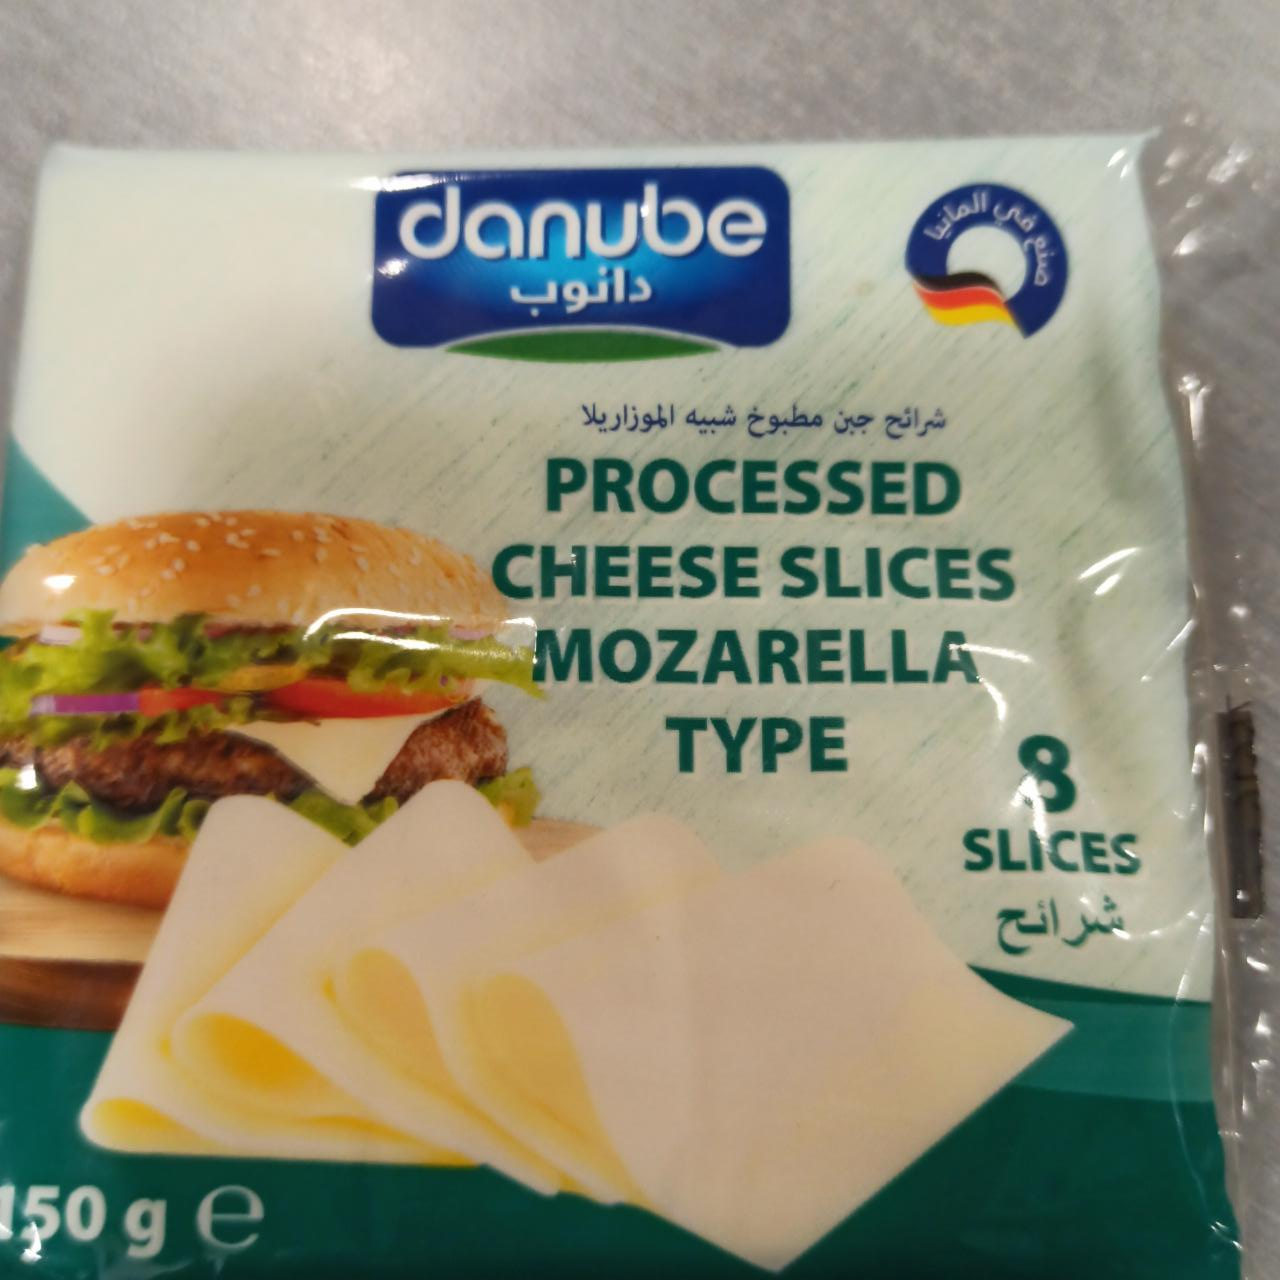 Fotografie - Processed cheese slices mozzarella type Danube